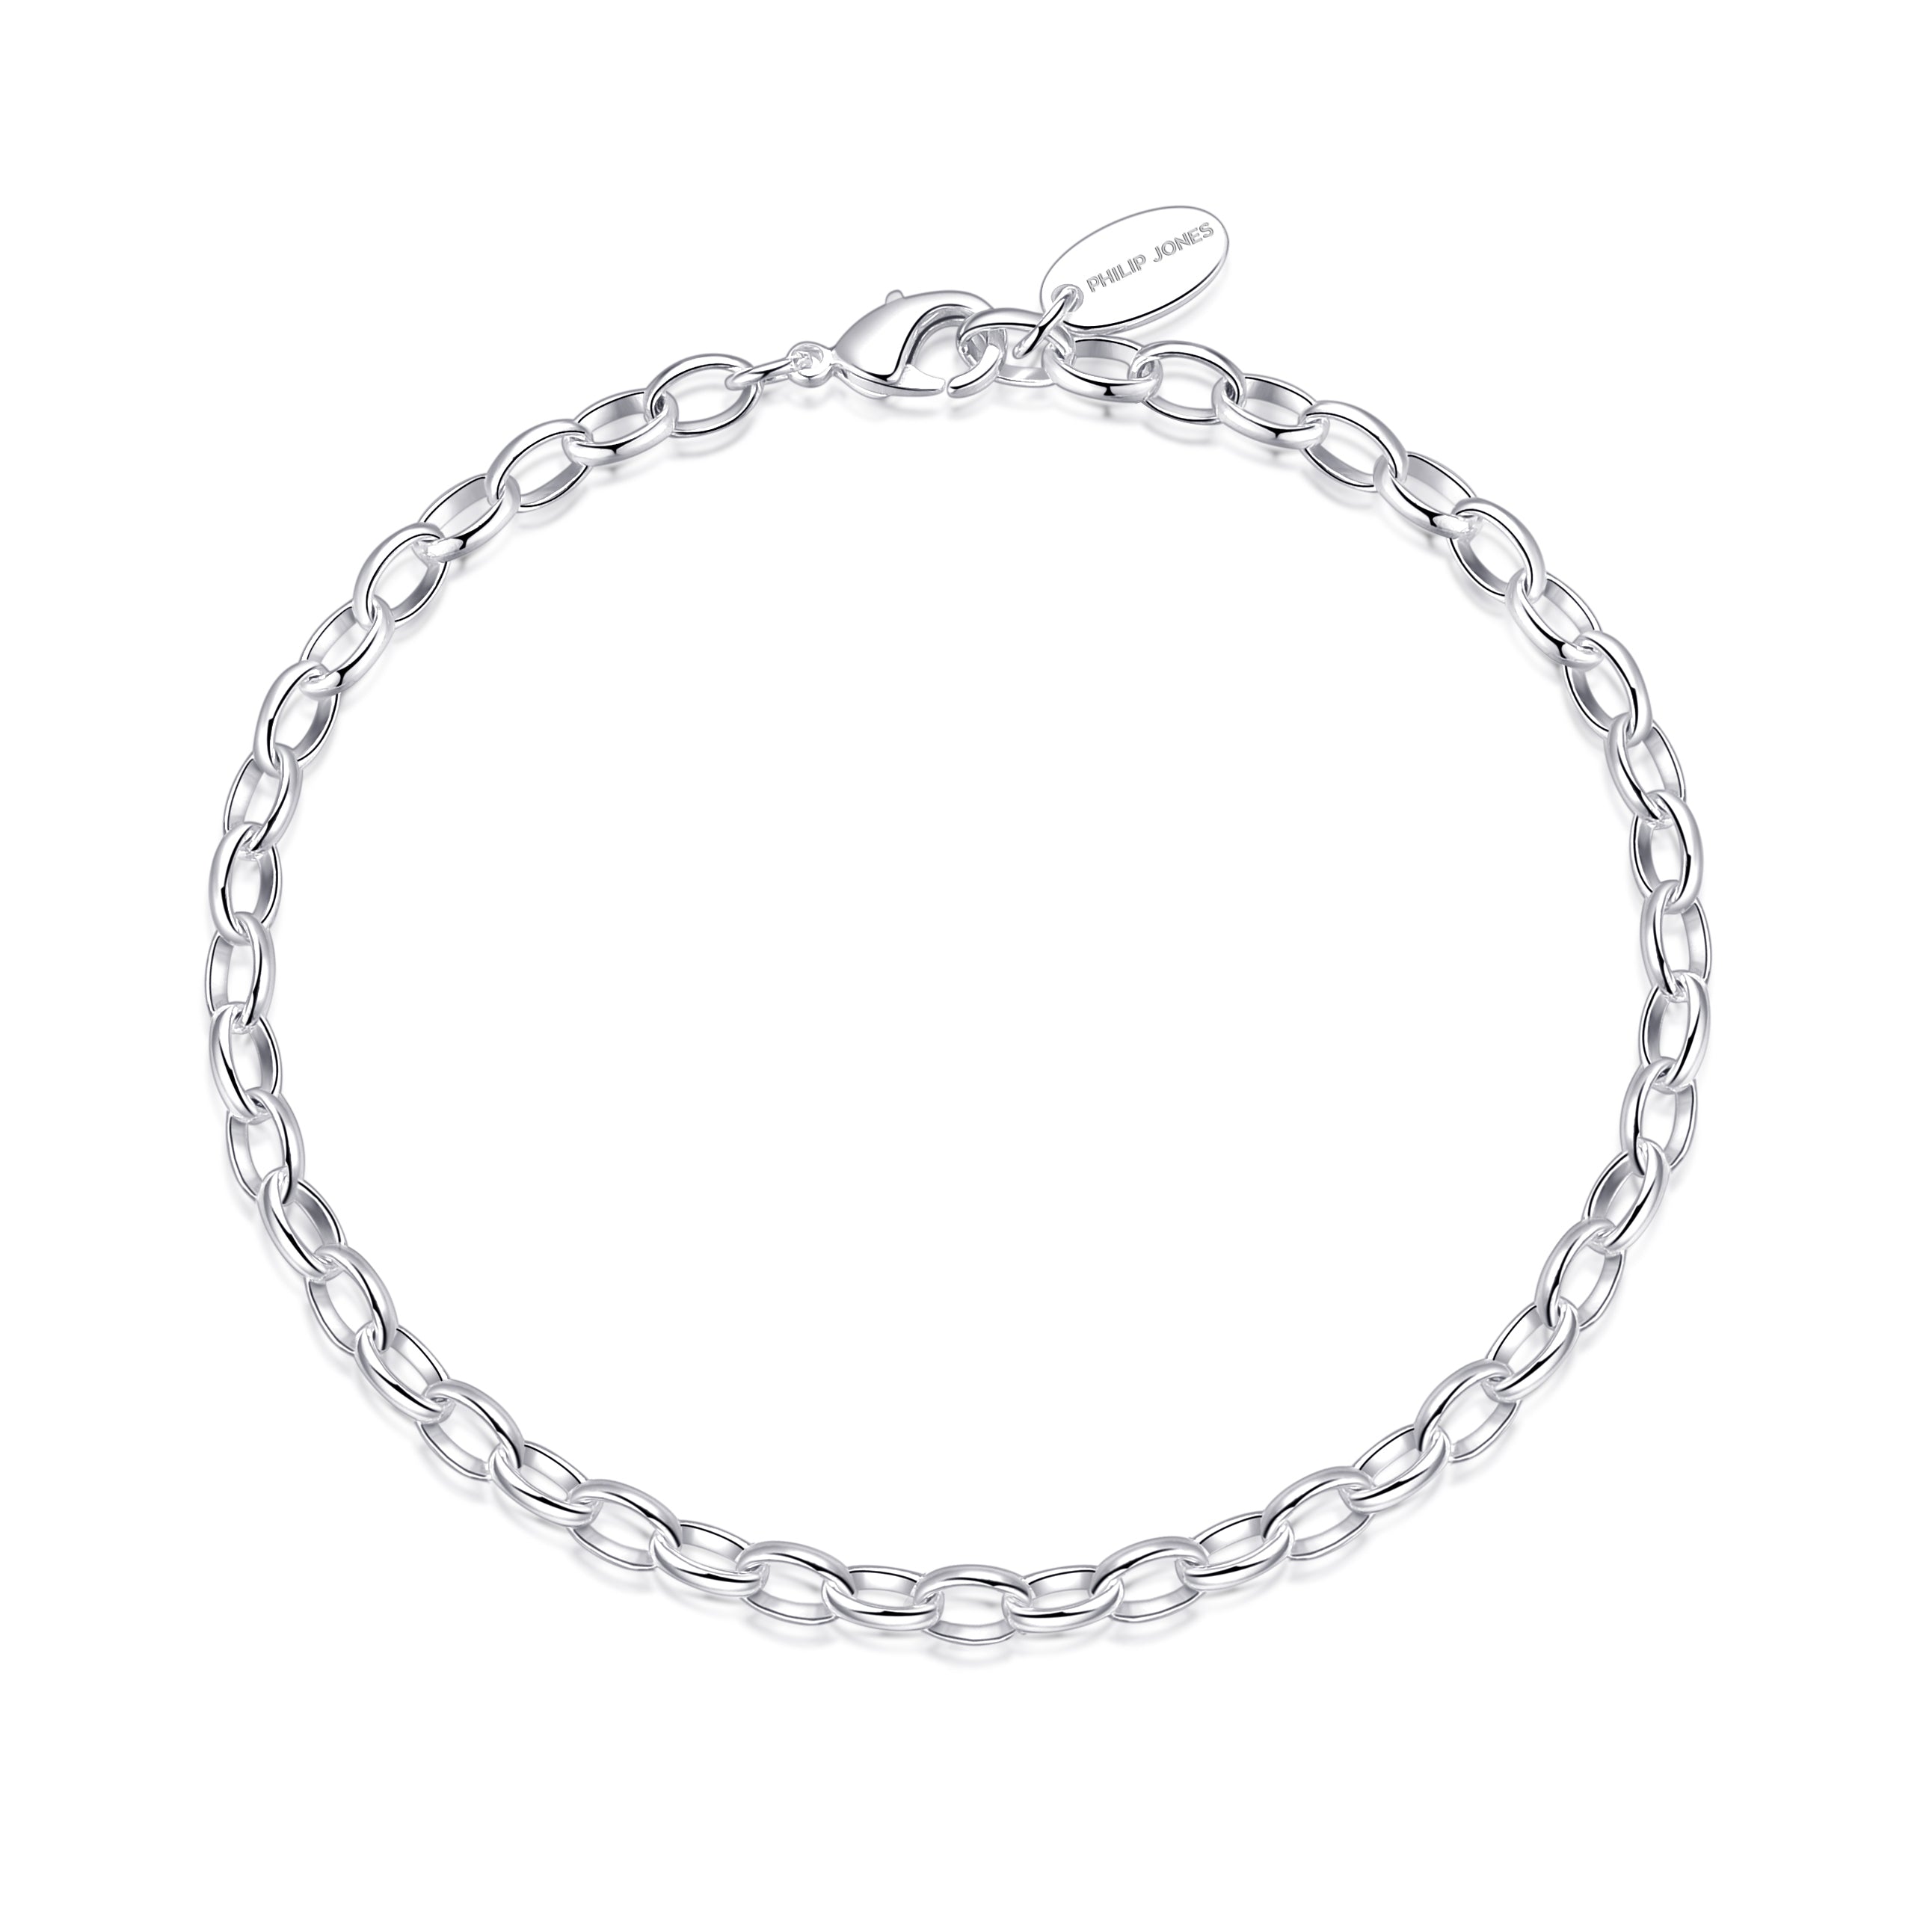 Silver Plated Link Chain Bracelet by Philip Jones Jewellery